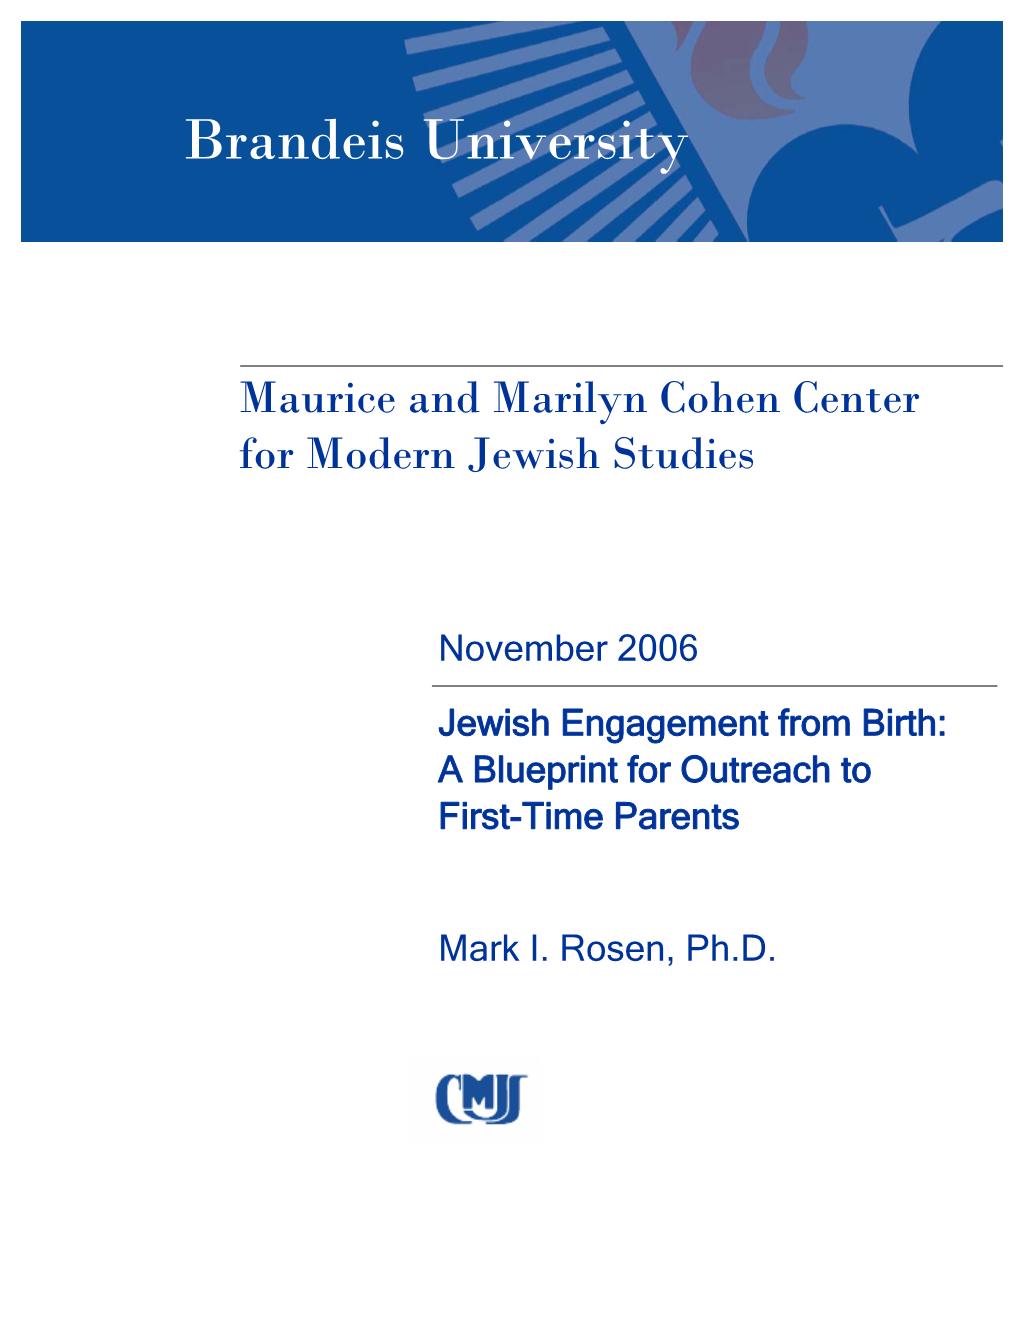 Executive Summary Jewish Engagement from Birth